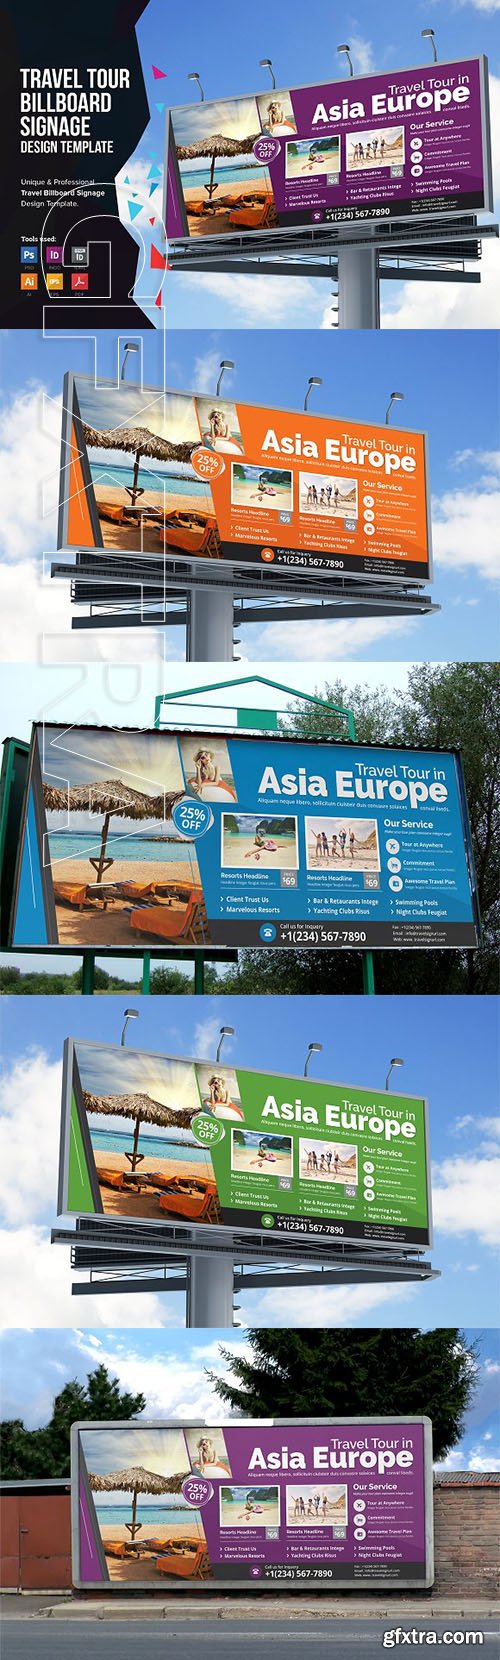 CreativeMarket - Holiday Travel Billboard Signage 2443922